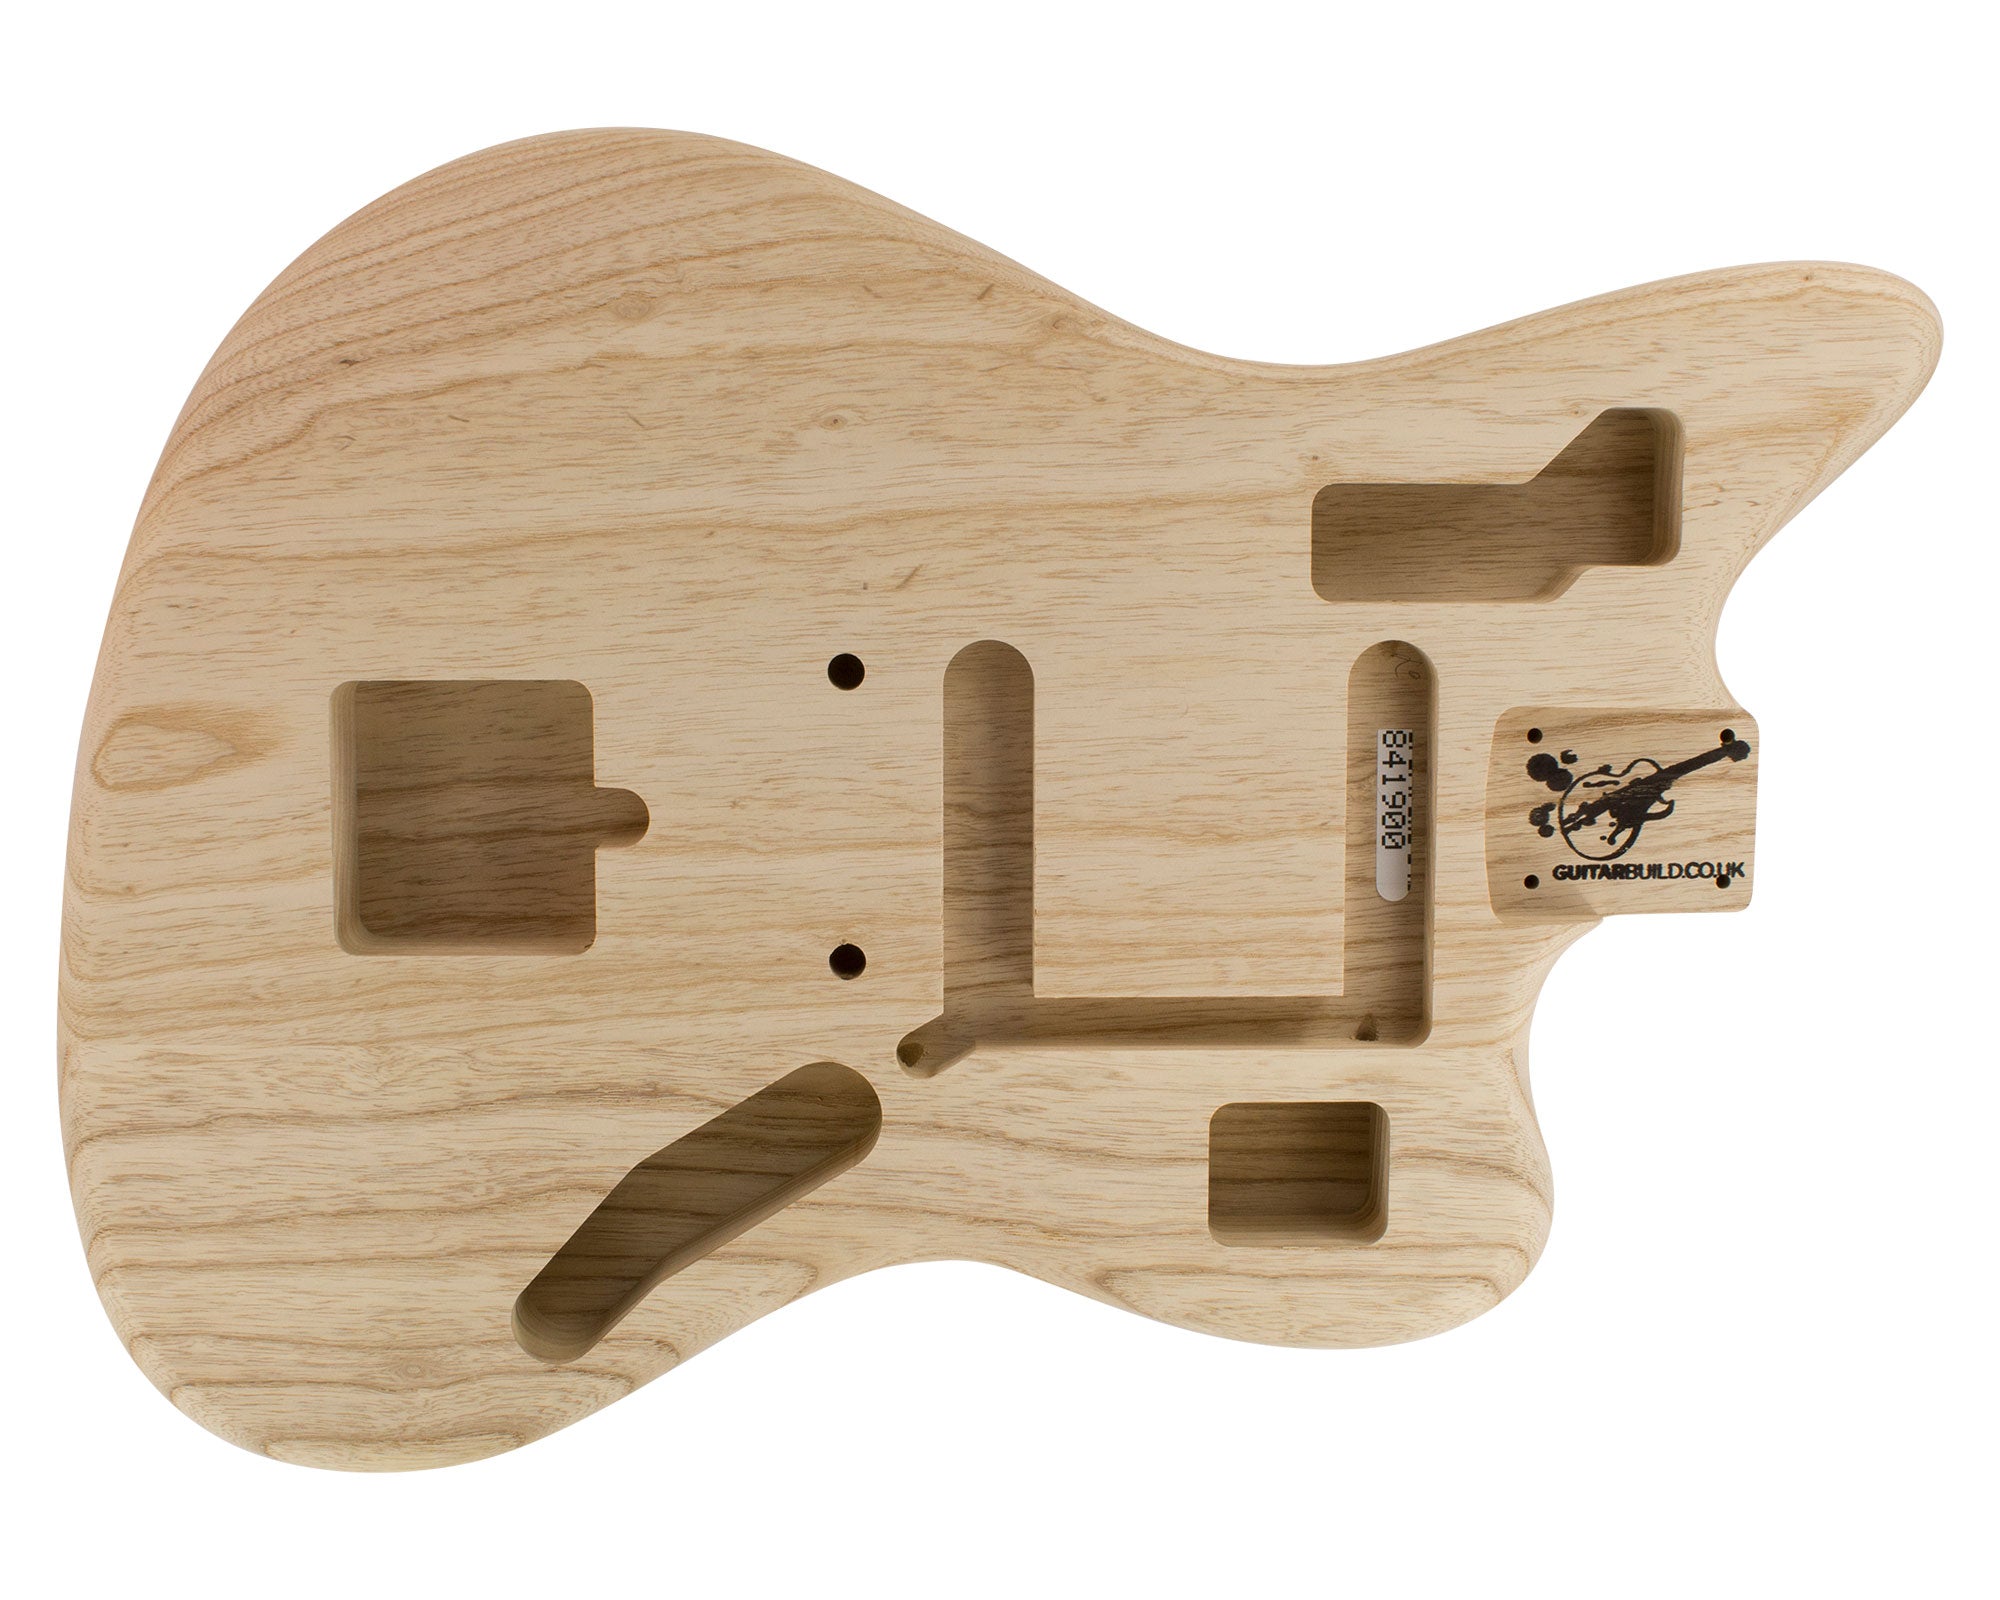 JG BODY REISSUE 2 2pc Swamp Ash 2.2 Kg - 841900-Guitar Bodies - In Stock-Guitarbuild